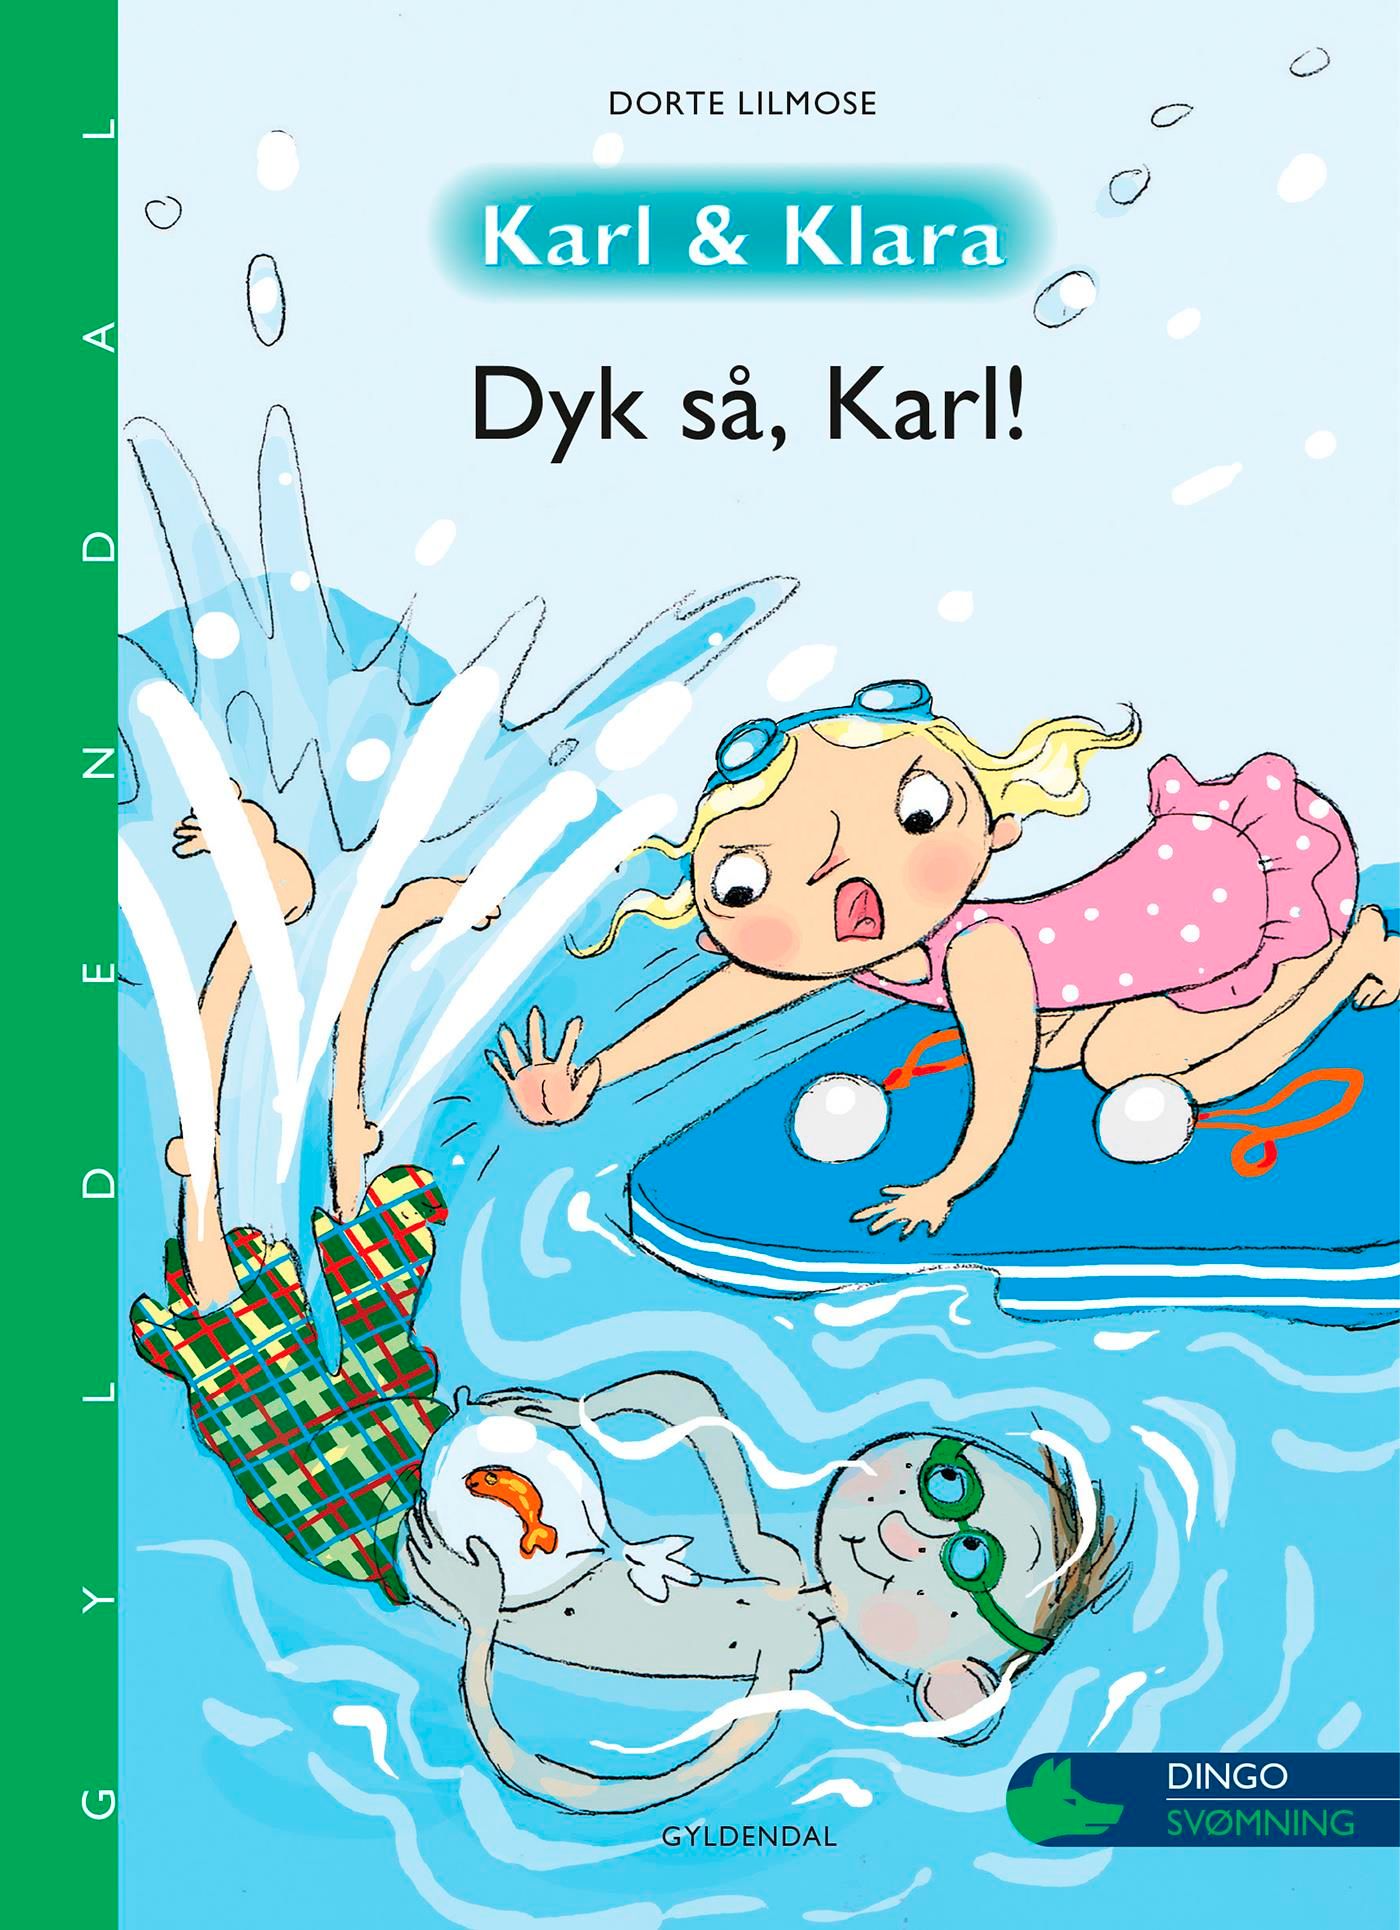 Karl og Klara - Dyk så, Karl!, eBook by Dorte Lilmose